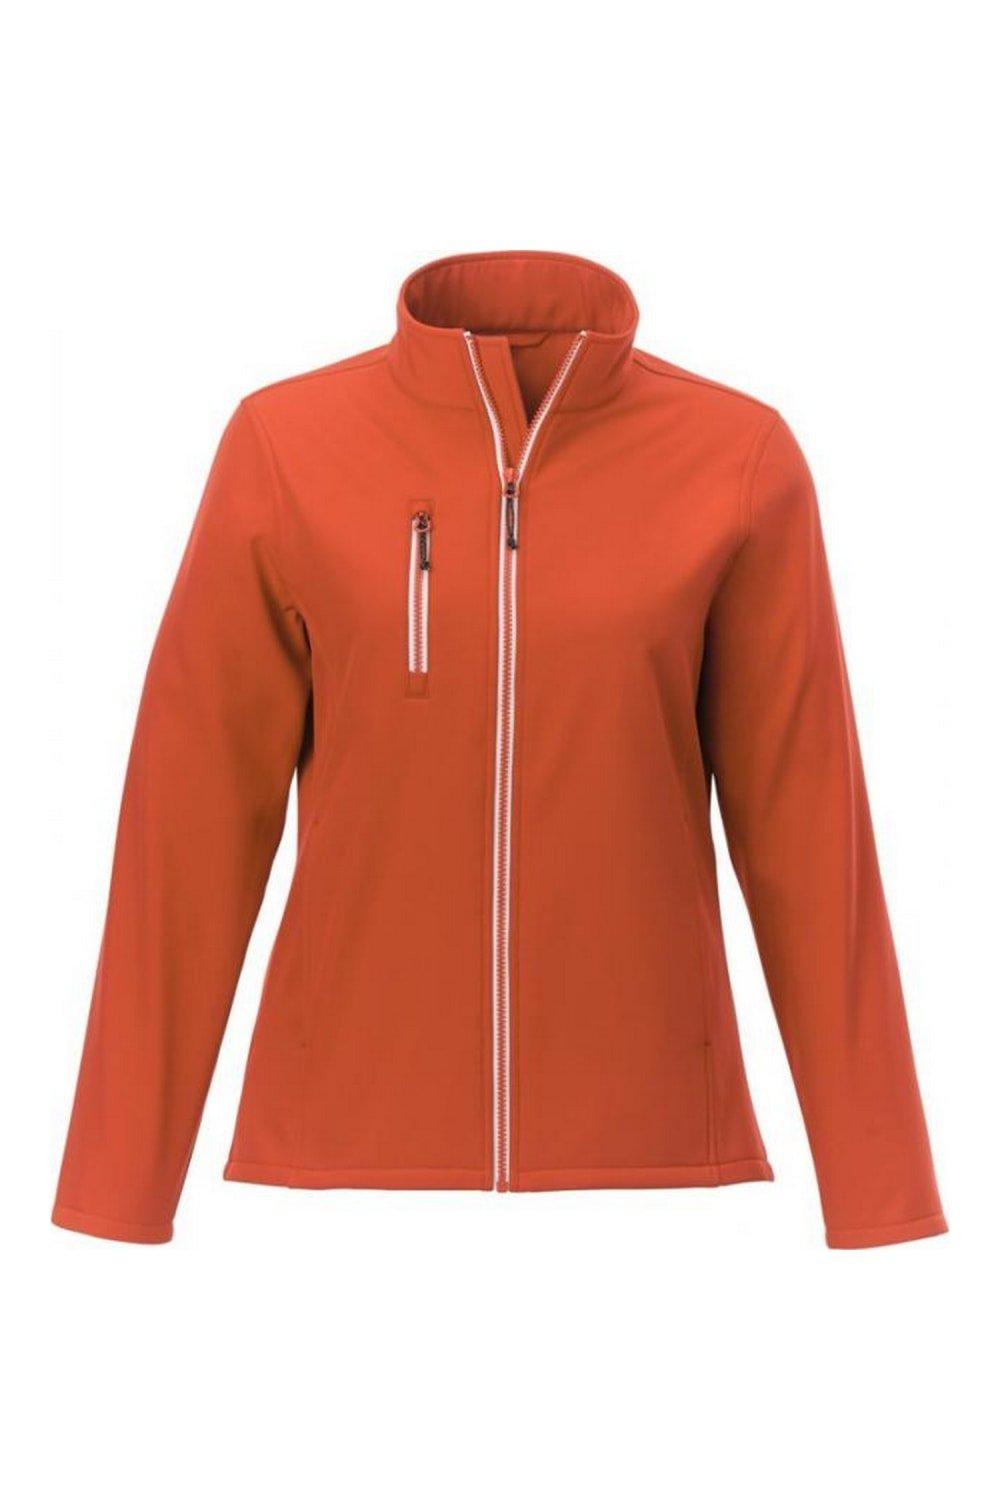 Куртка Orion Softshell Elevate, оранжевый